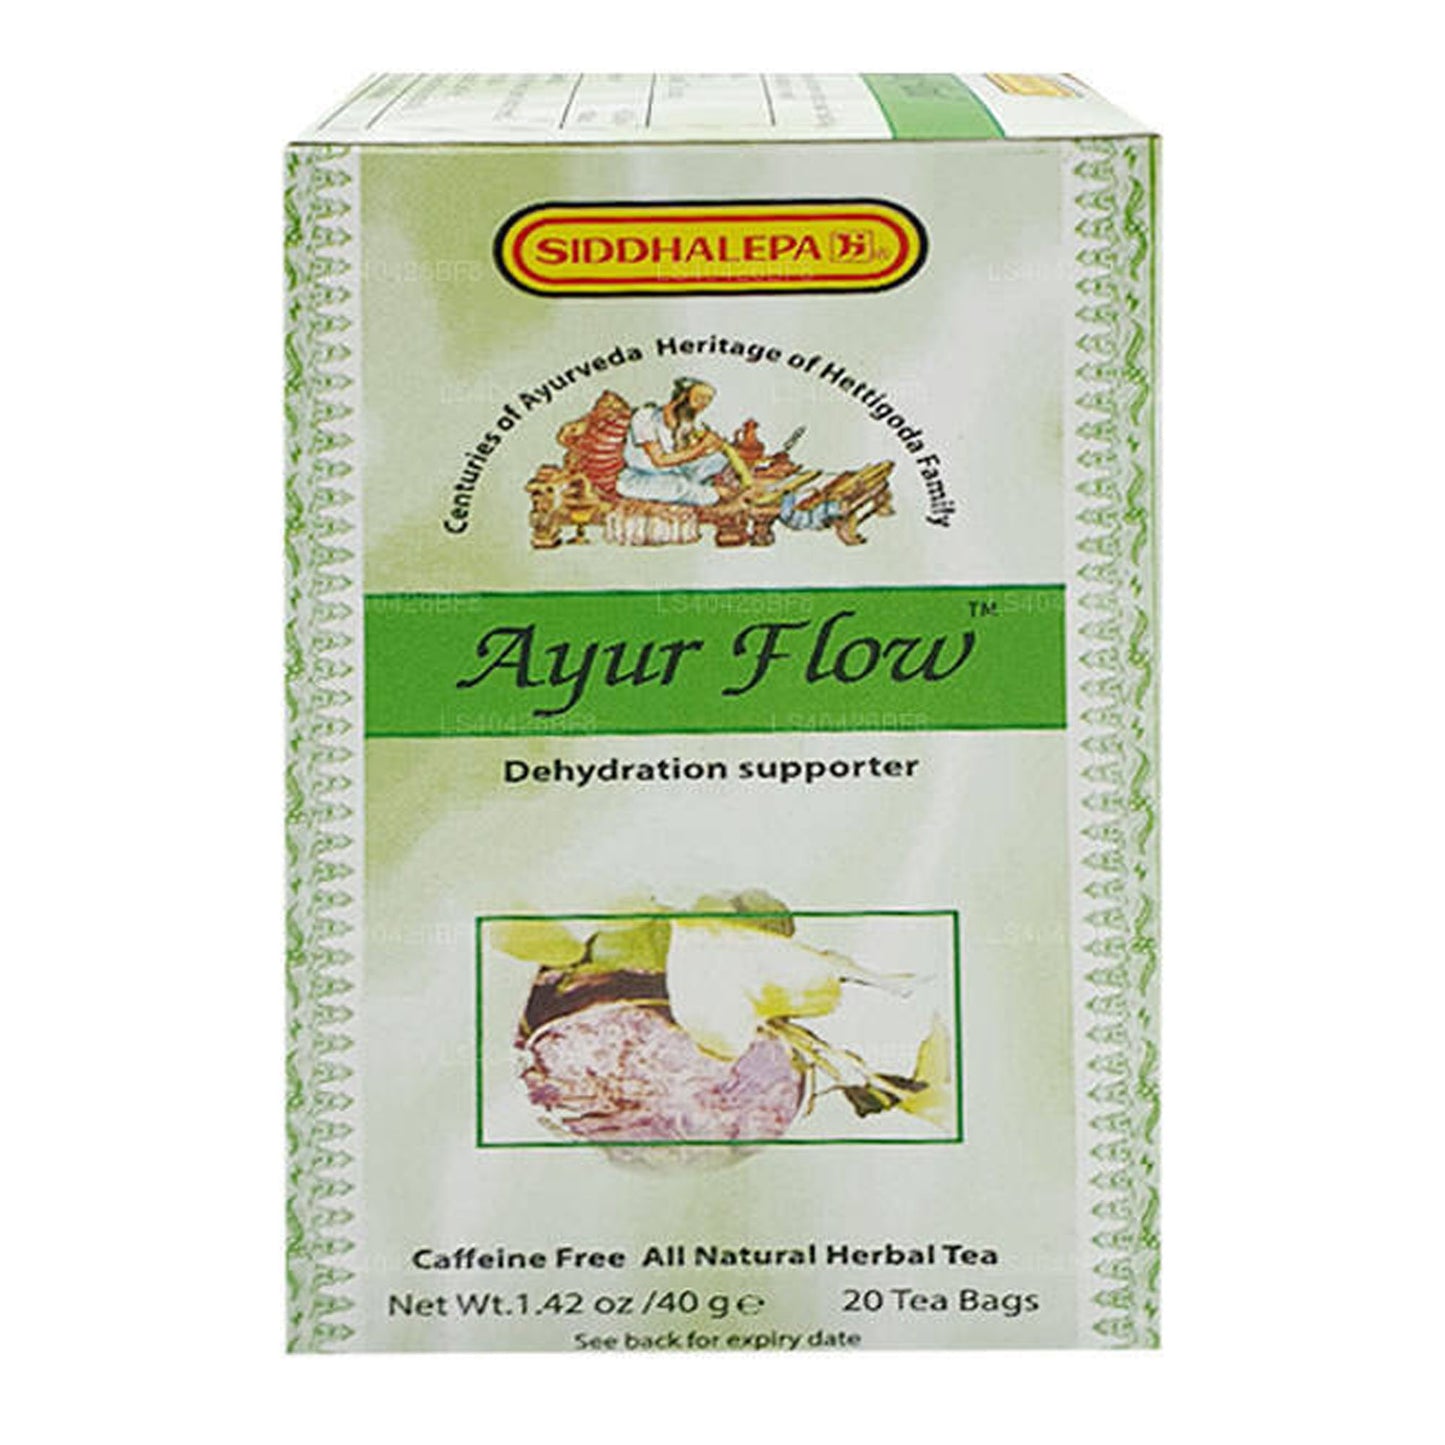 Siddhalepa Ayur Flow Tea (20 Tea Bags)